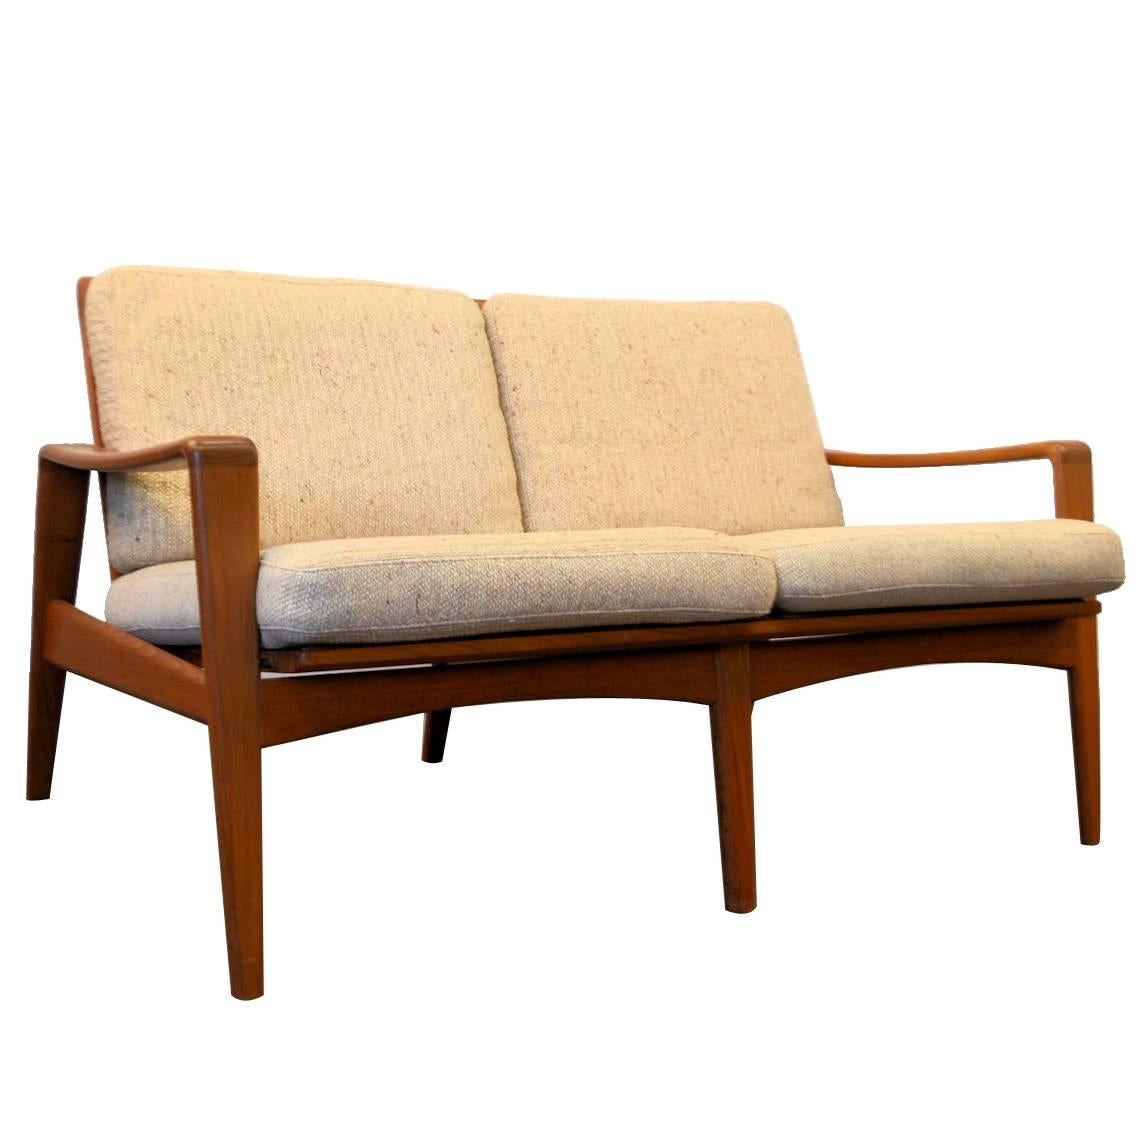 Arne Wahl Iversen Two-Seating Teak Sofa For Sale